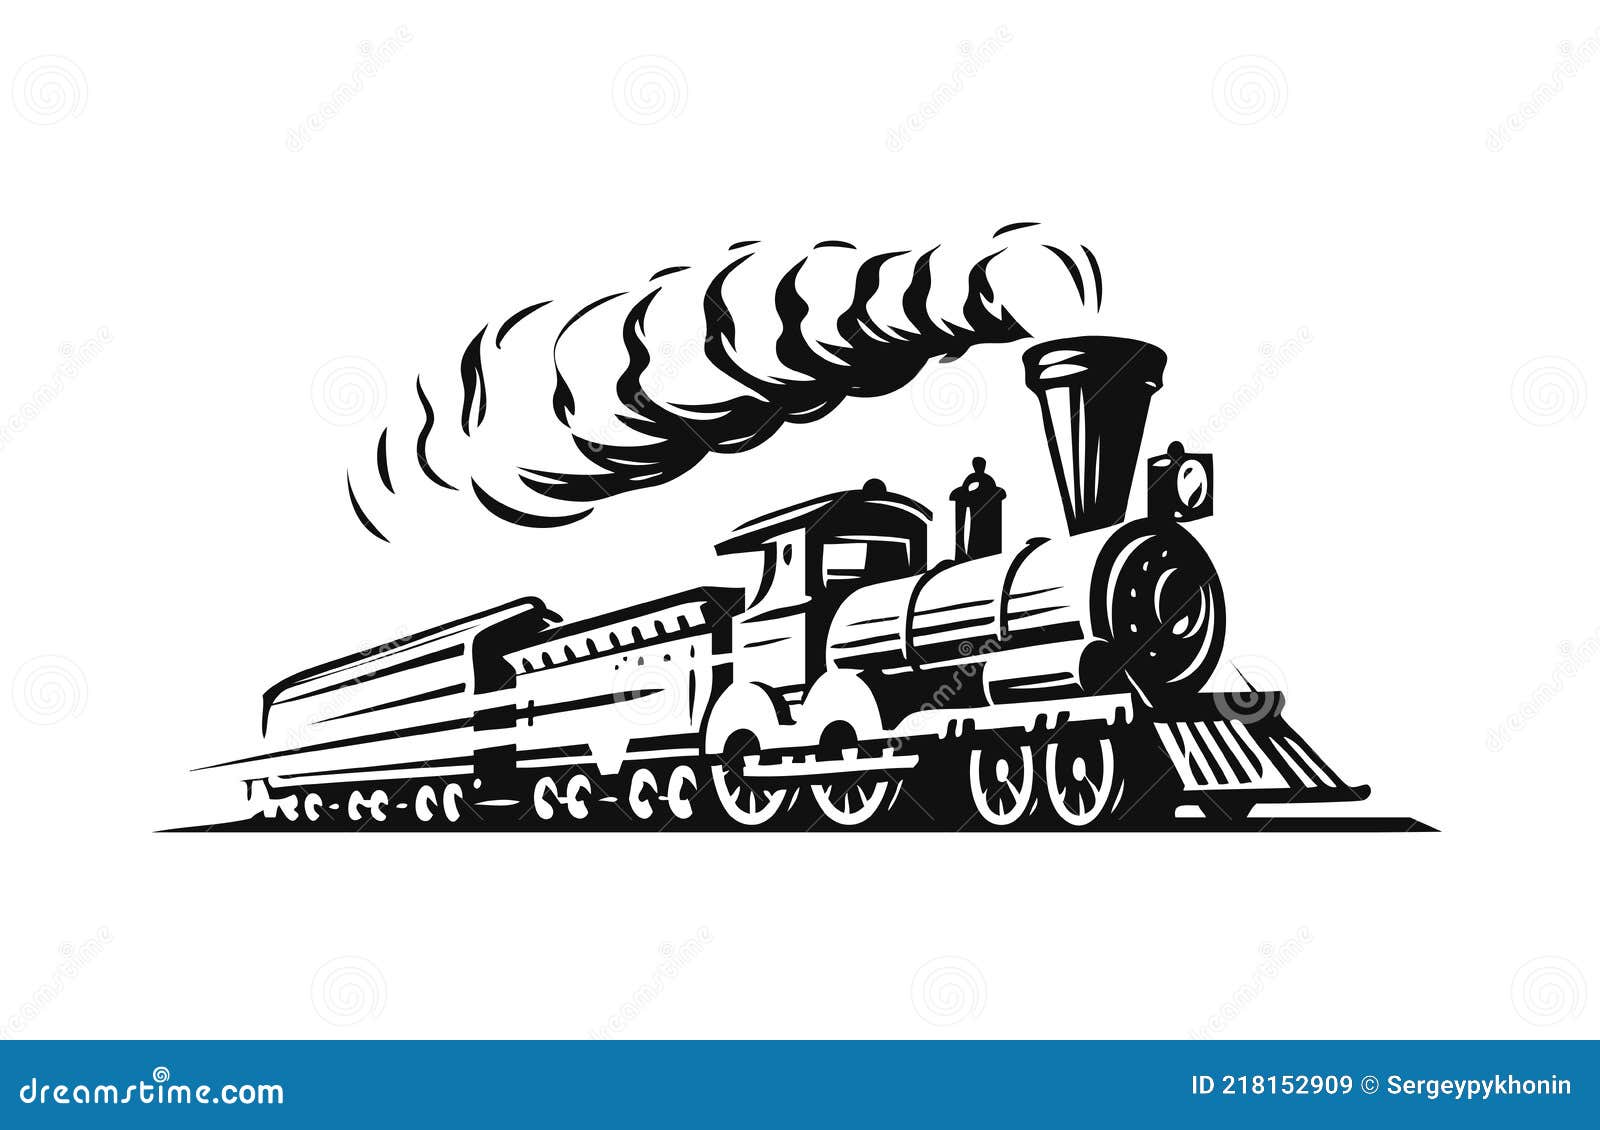 moving retro steam locomotive. vintage train emblem or   